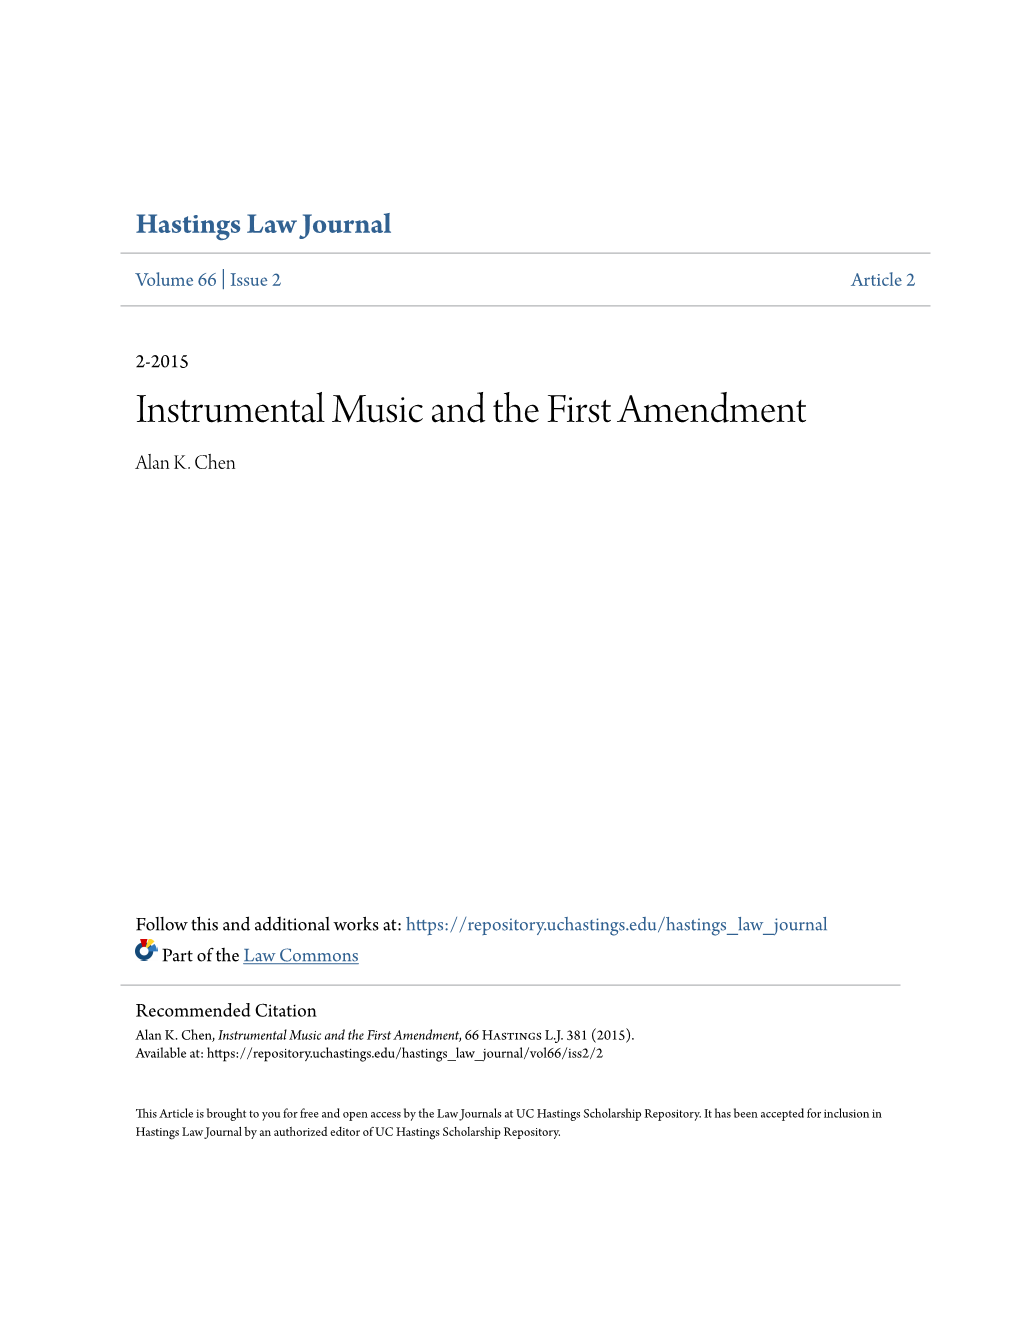 Instrumental Music and the First Amendment Alan K